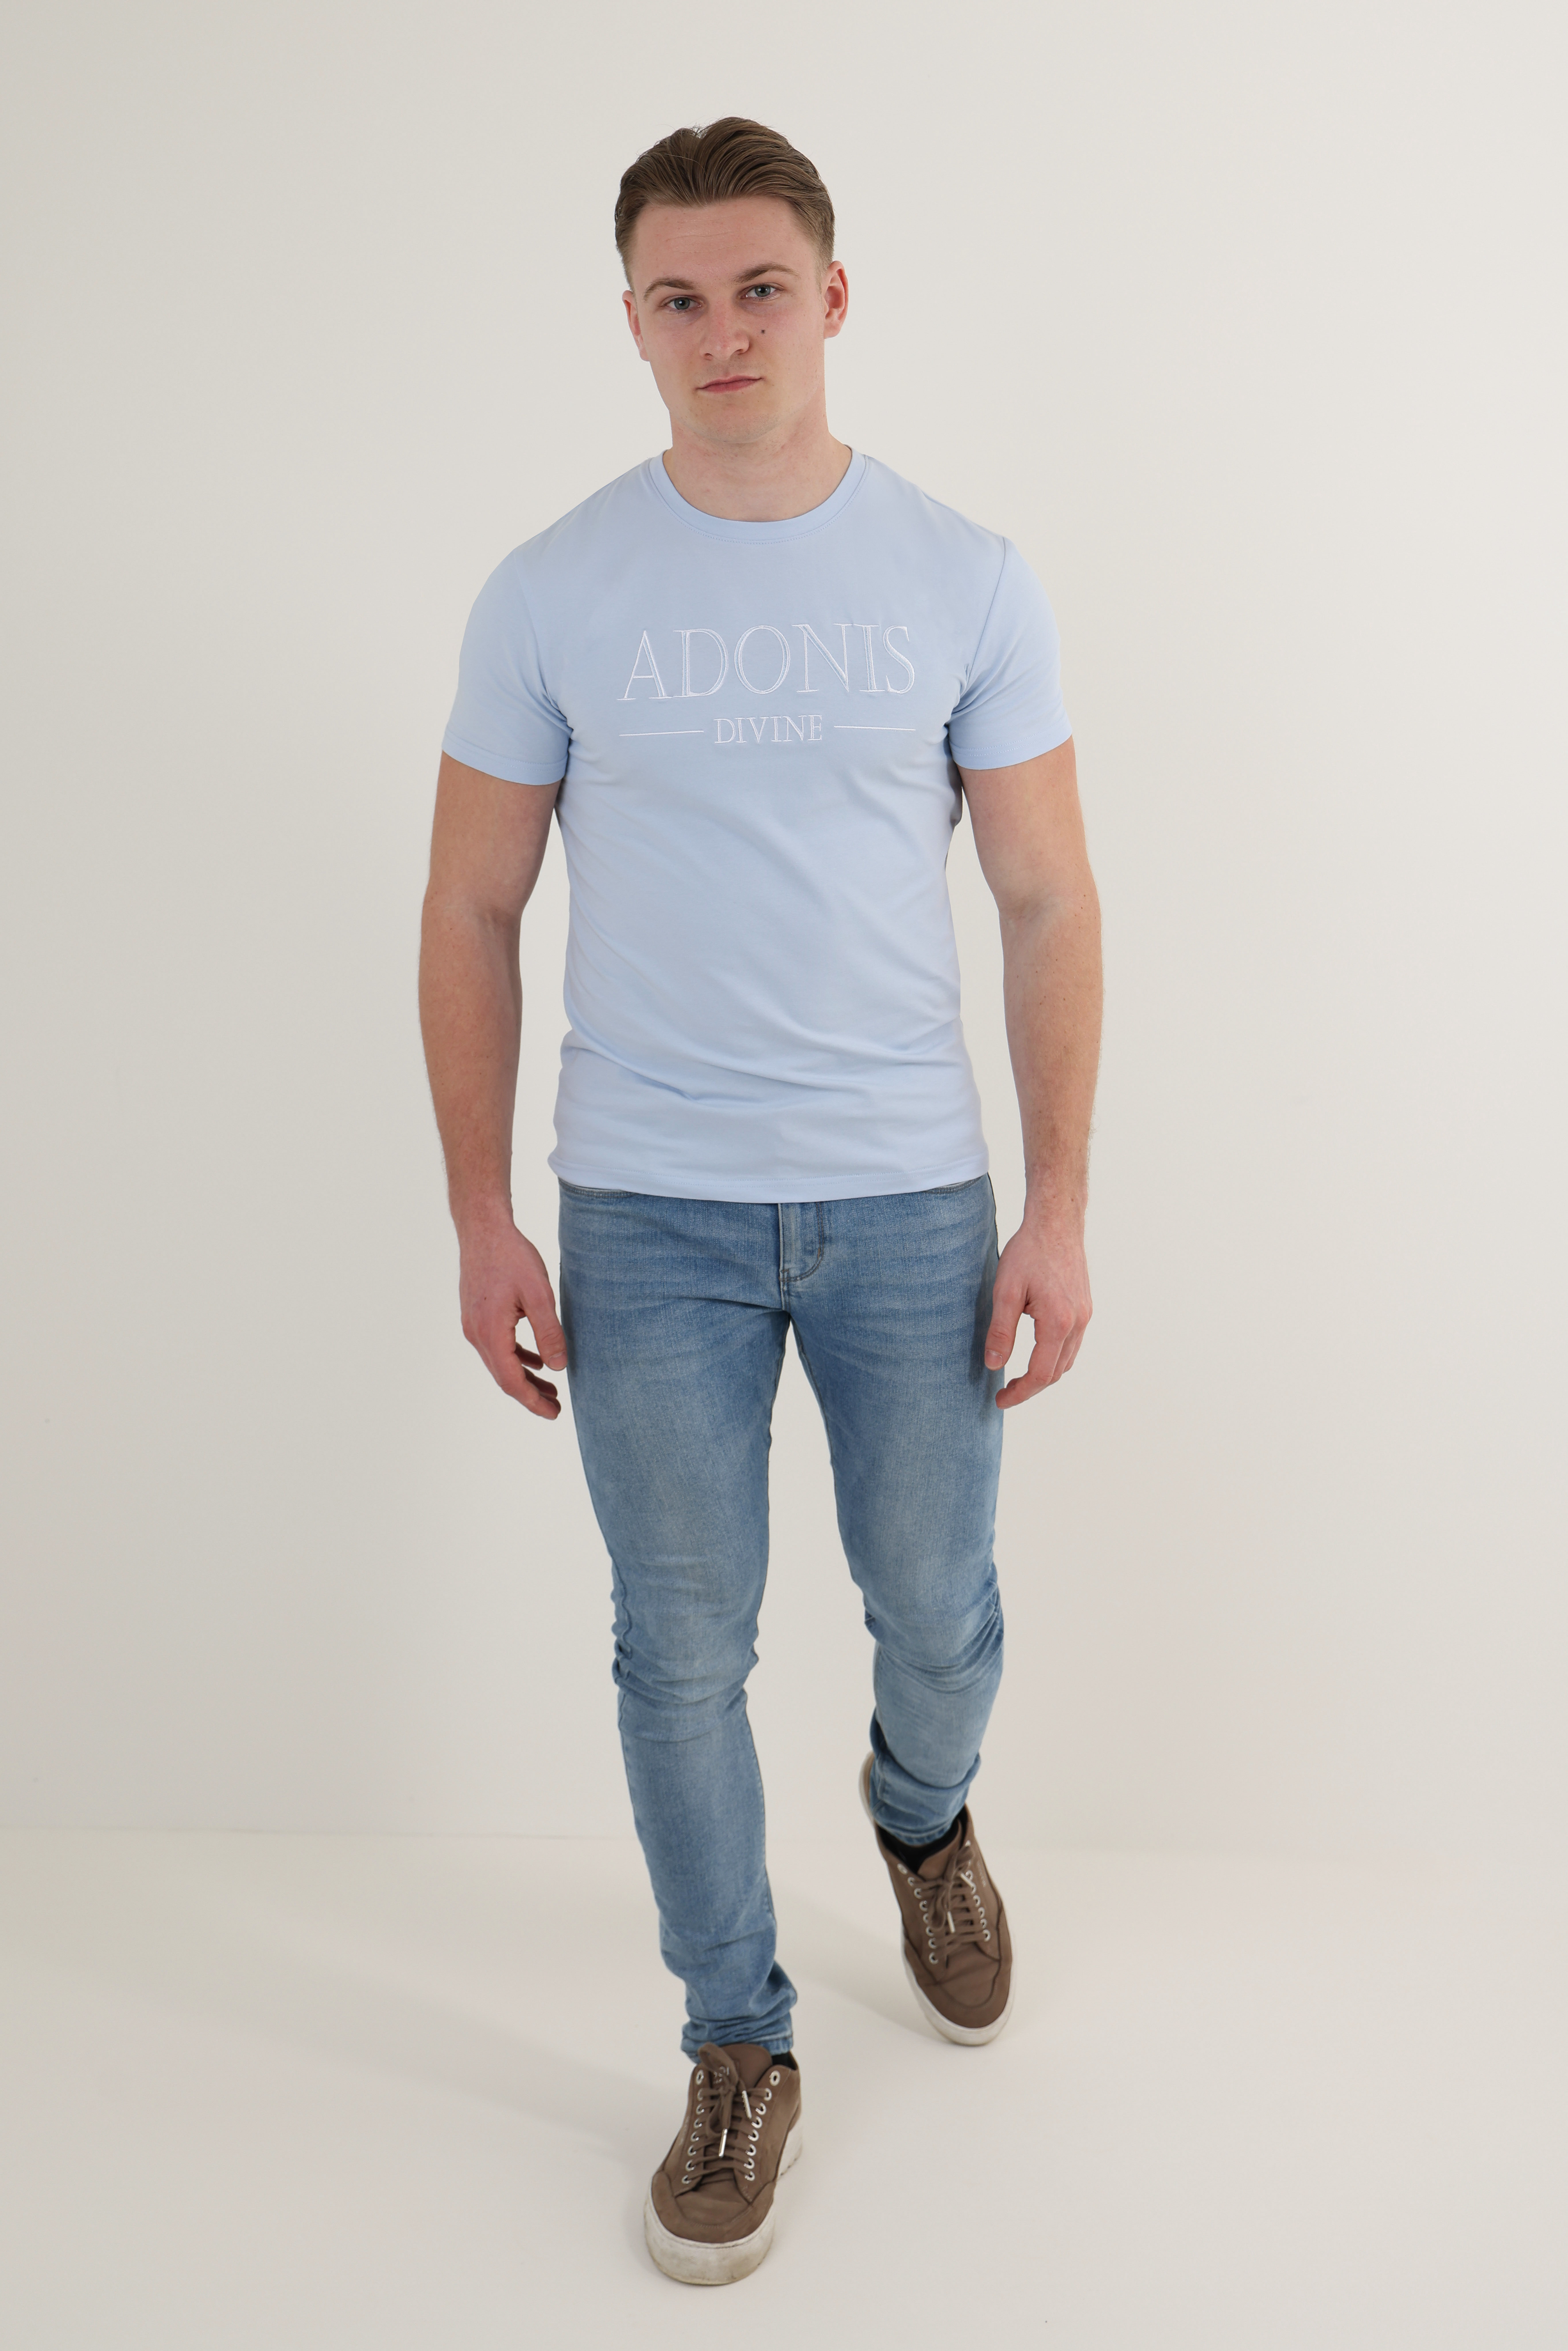 Muscle Fit T Shirt - Slim Fit T Shirt - Premium T Shirt - Blue - Blauw